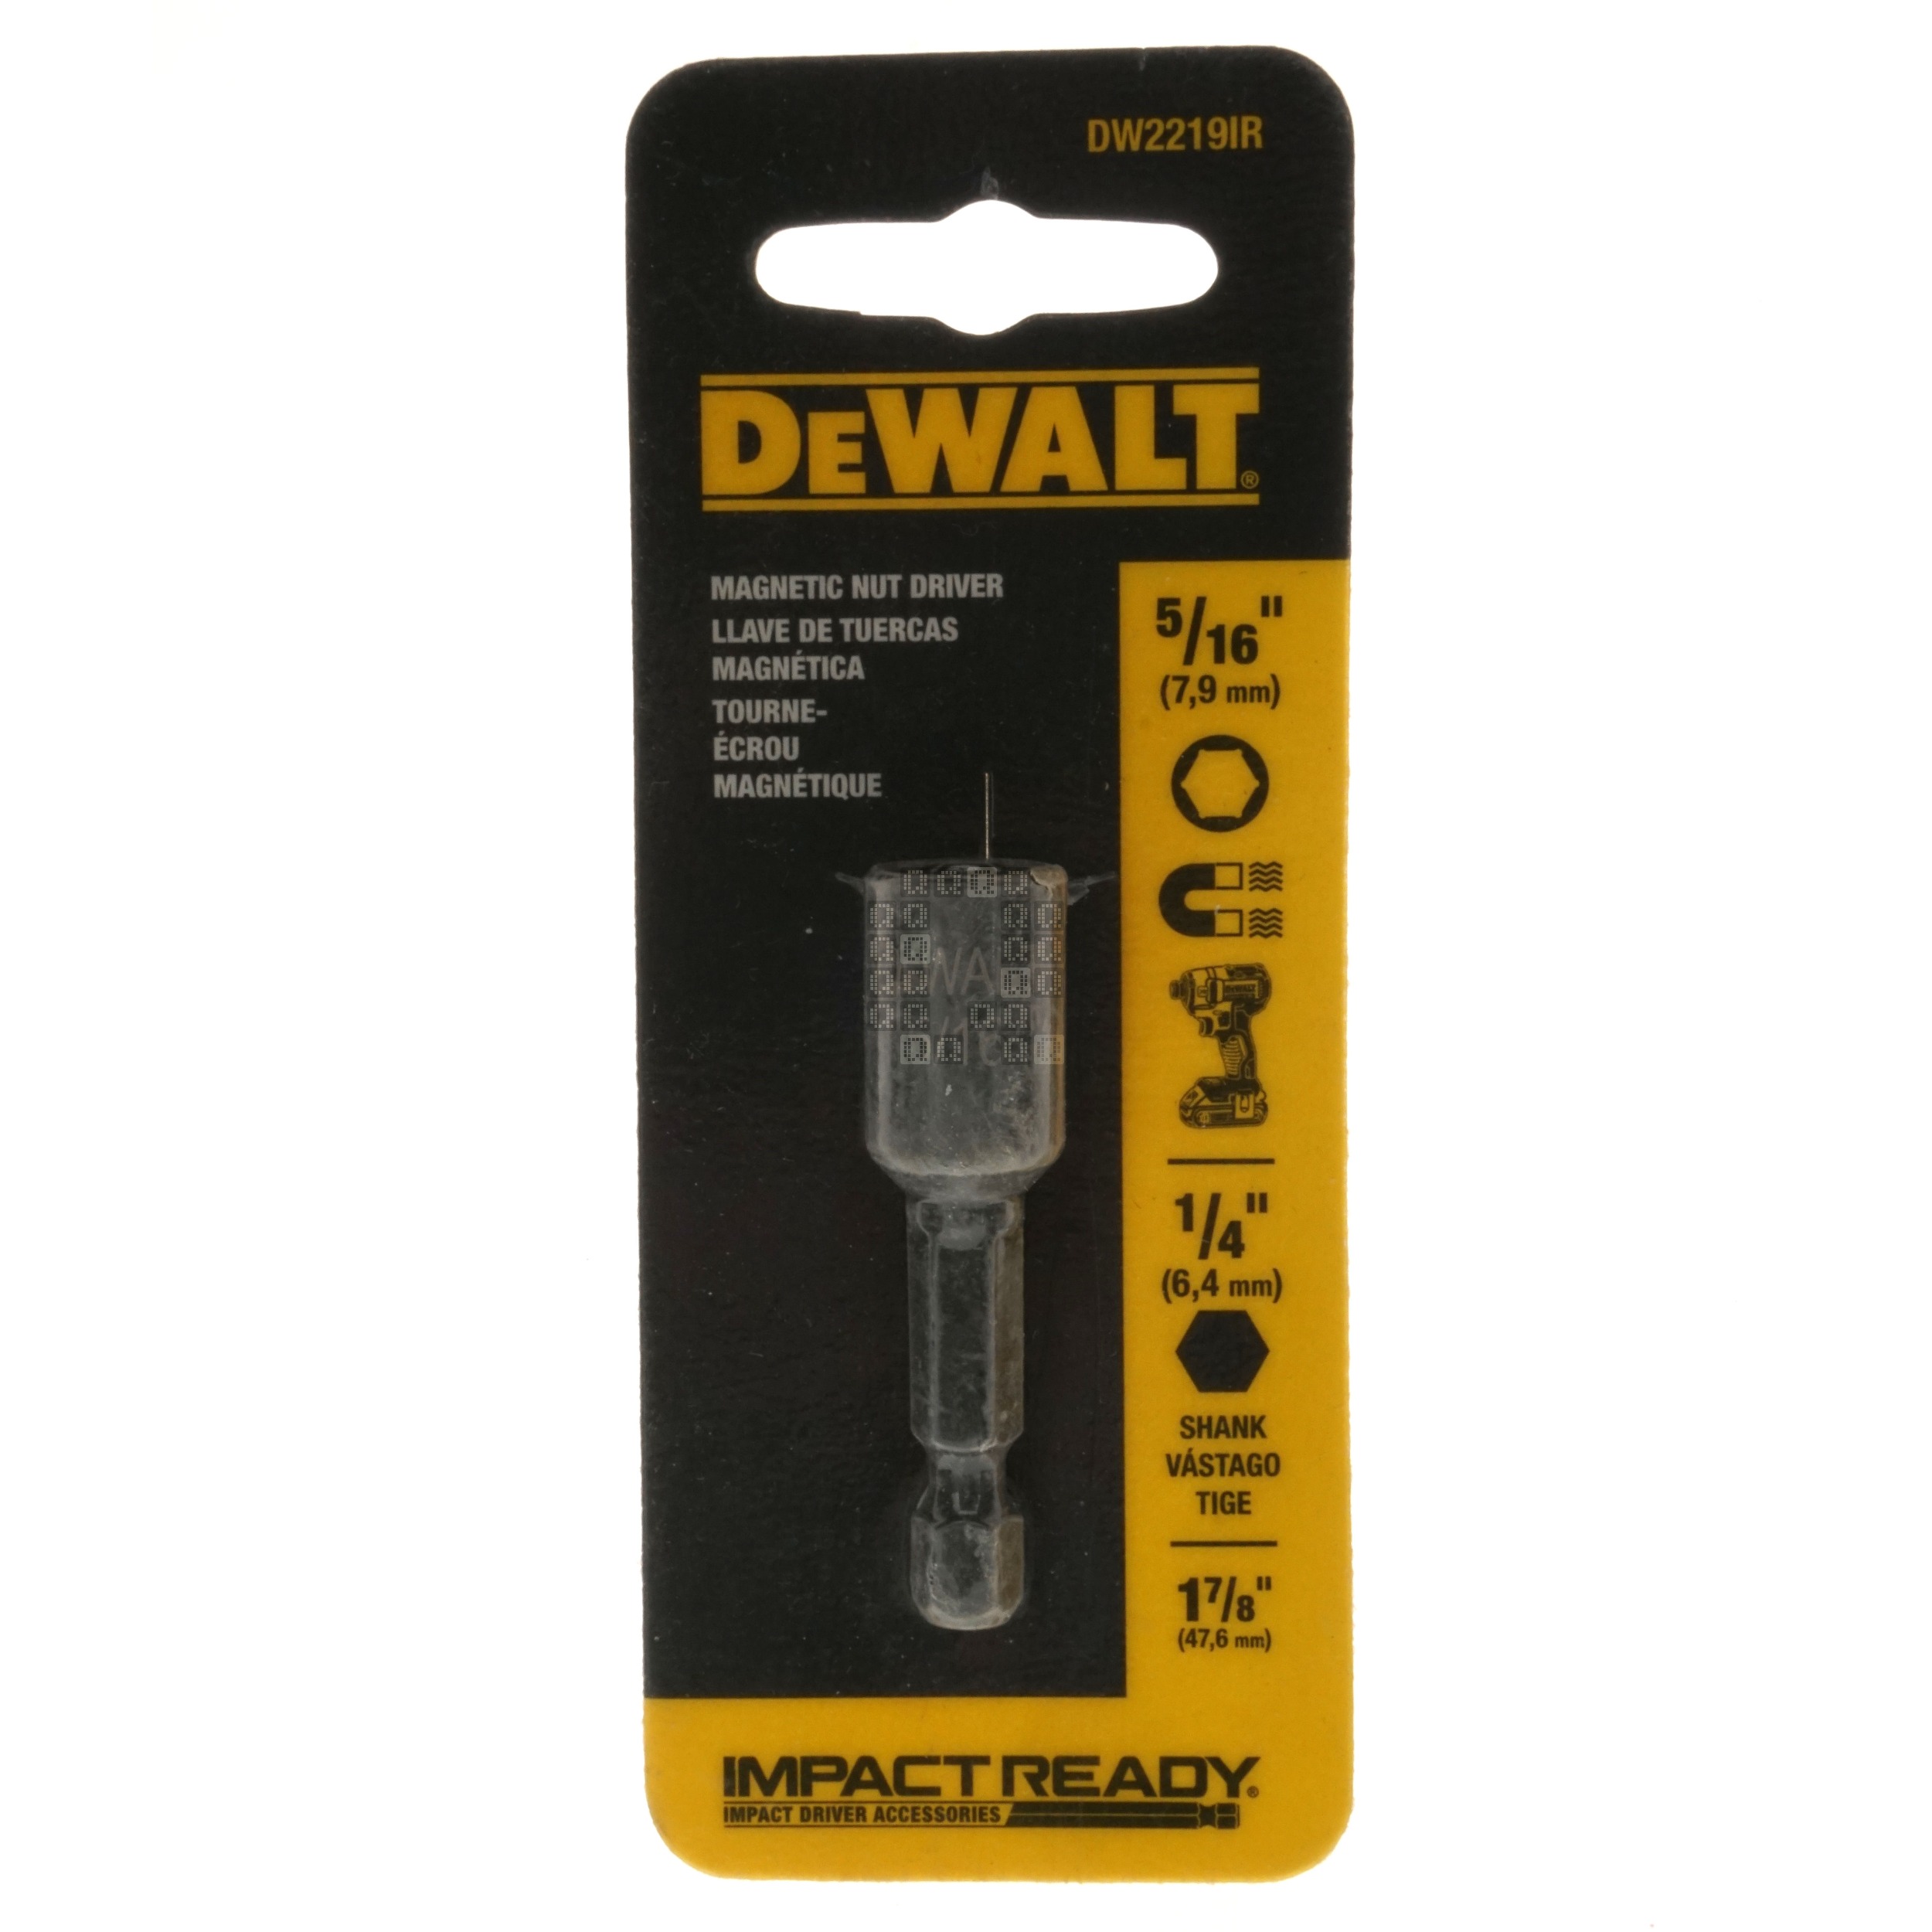 DeWALT DW2219IR 1/4" x 5/16" Hex Impact Ready Magnetic Nut Driver, 1-7/8" Length